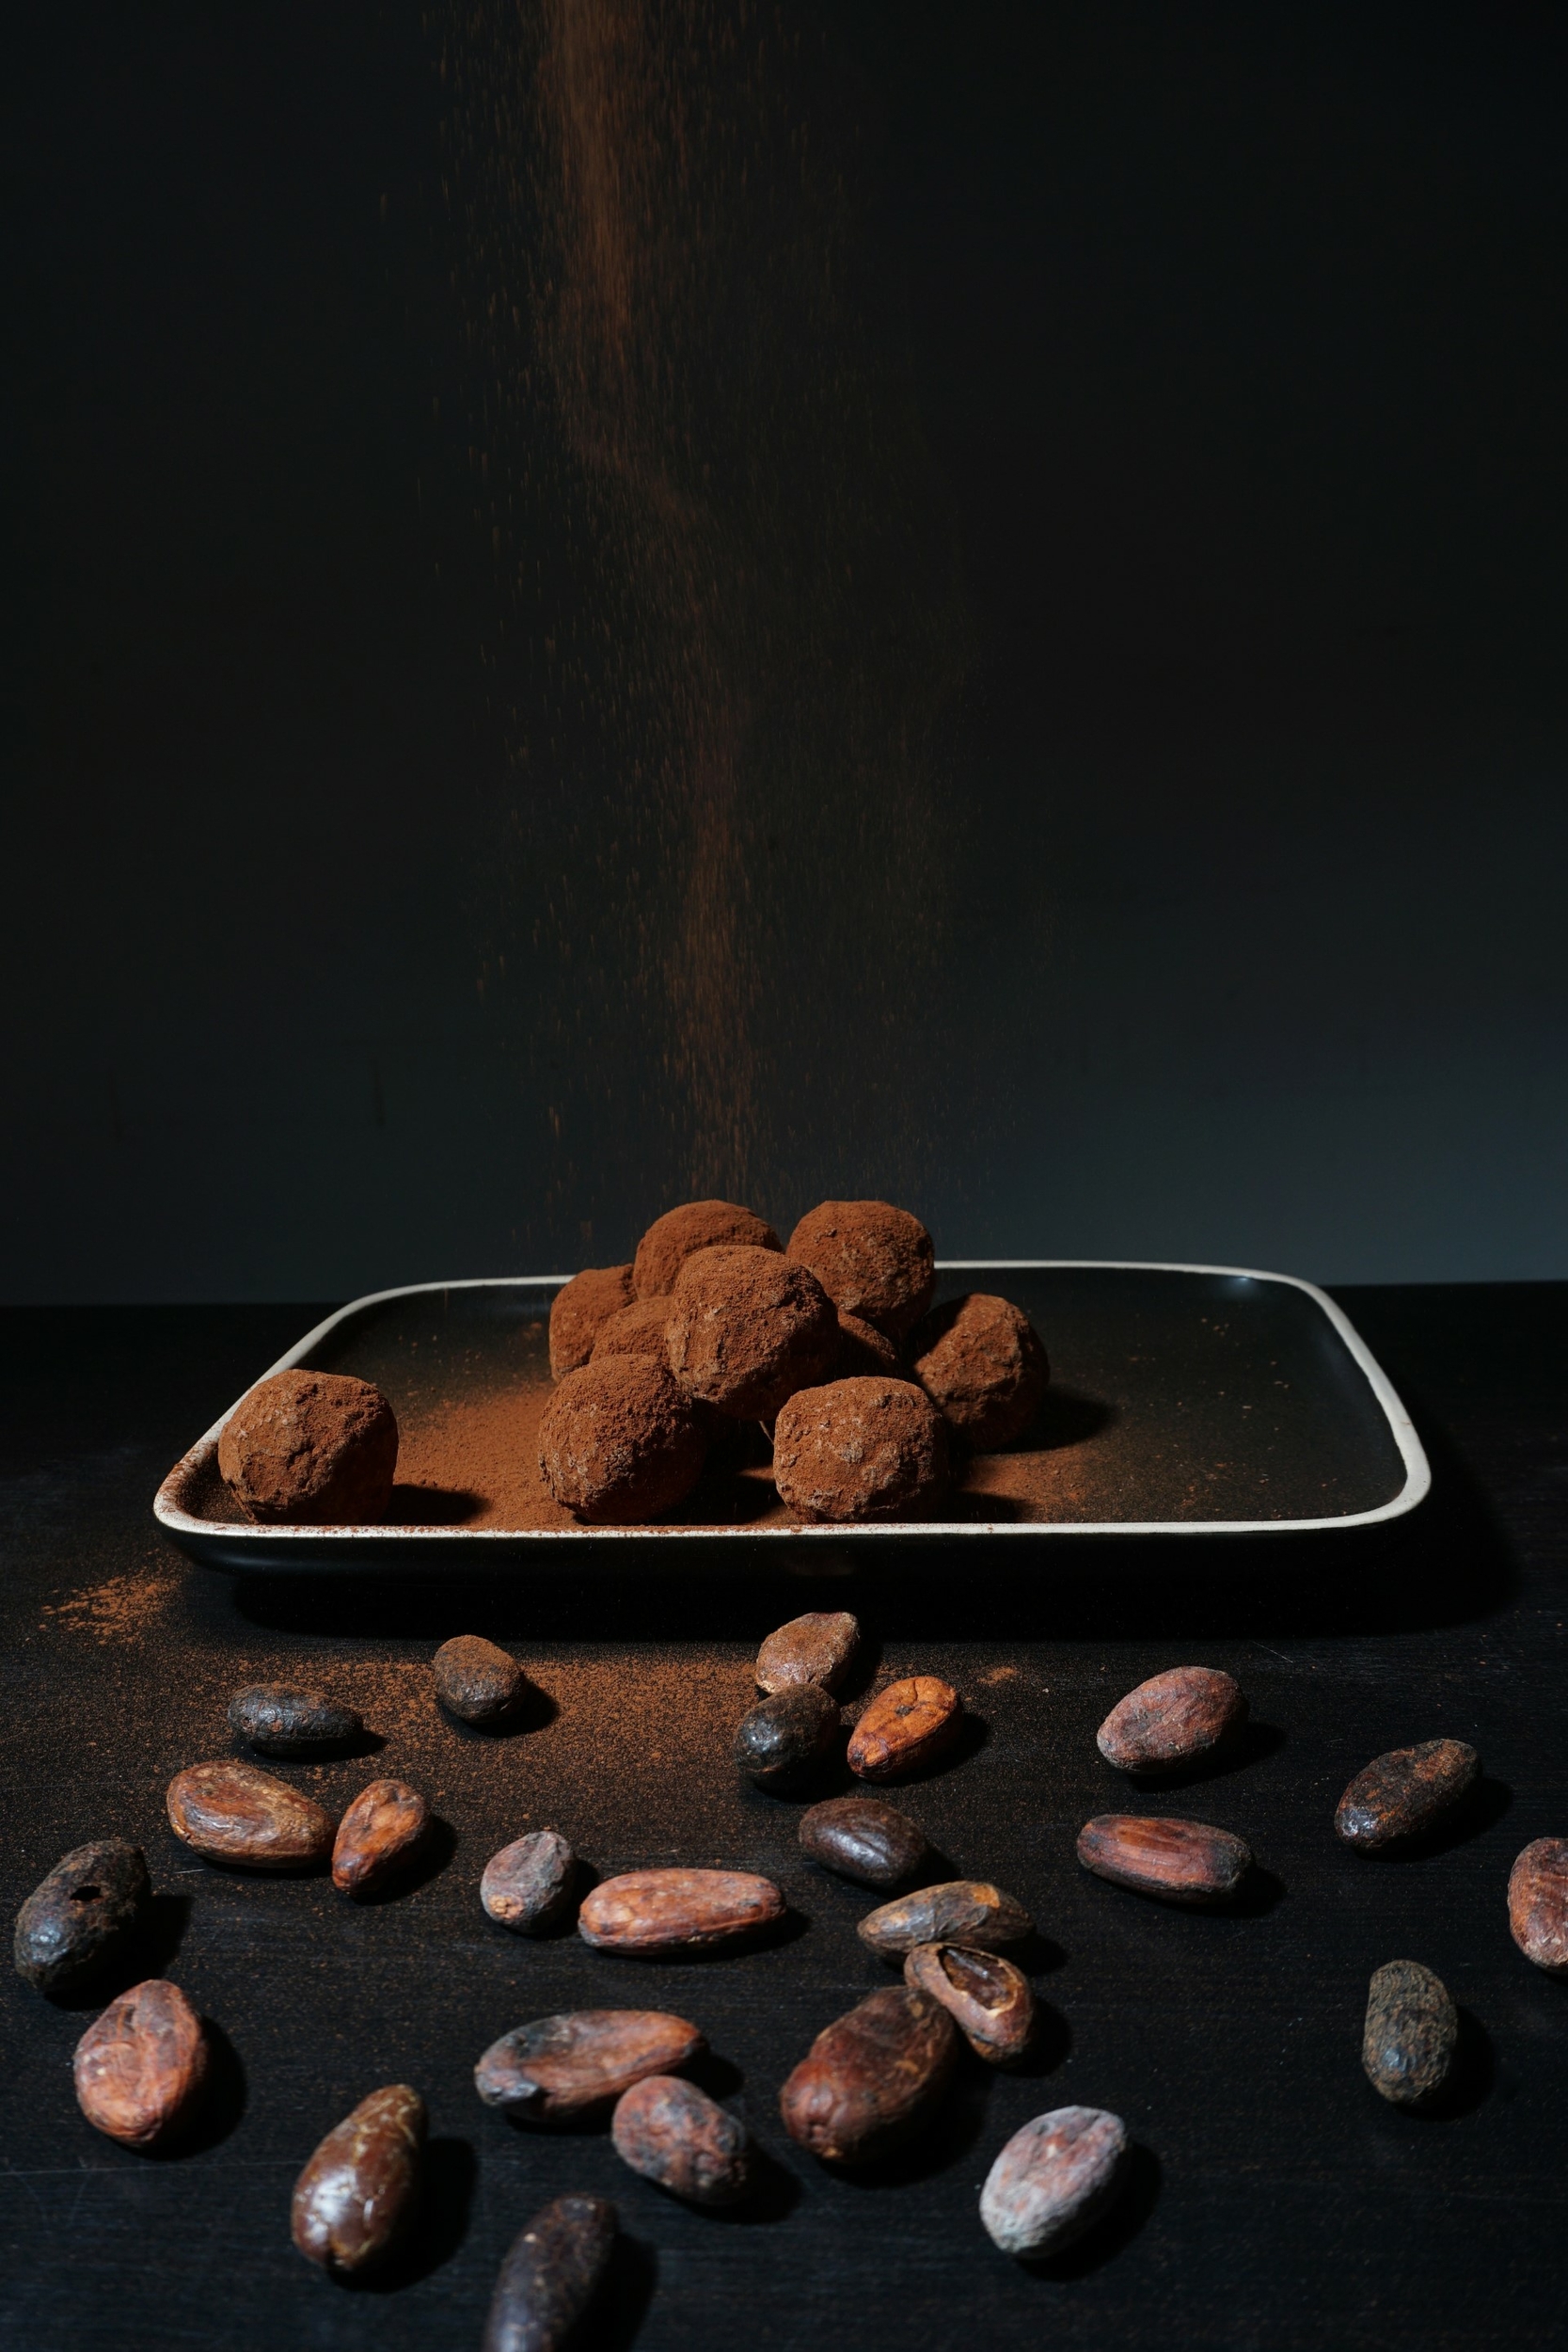 Assortiments chocolats boite 2 tiroirs - environ 50 chocolats - ASSORTIMENTS /ASSORTIMENTS PHARE - meschocolats